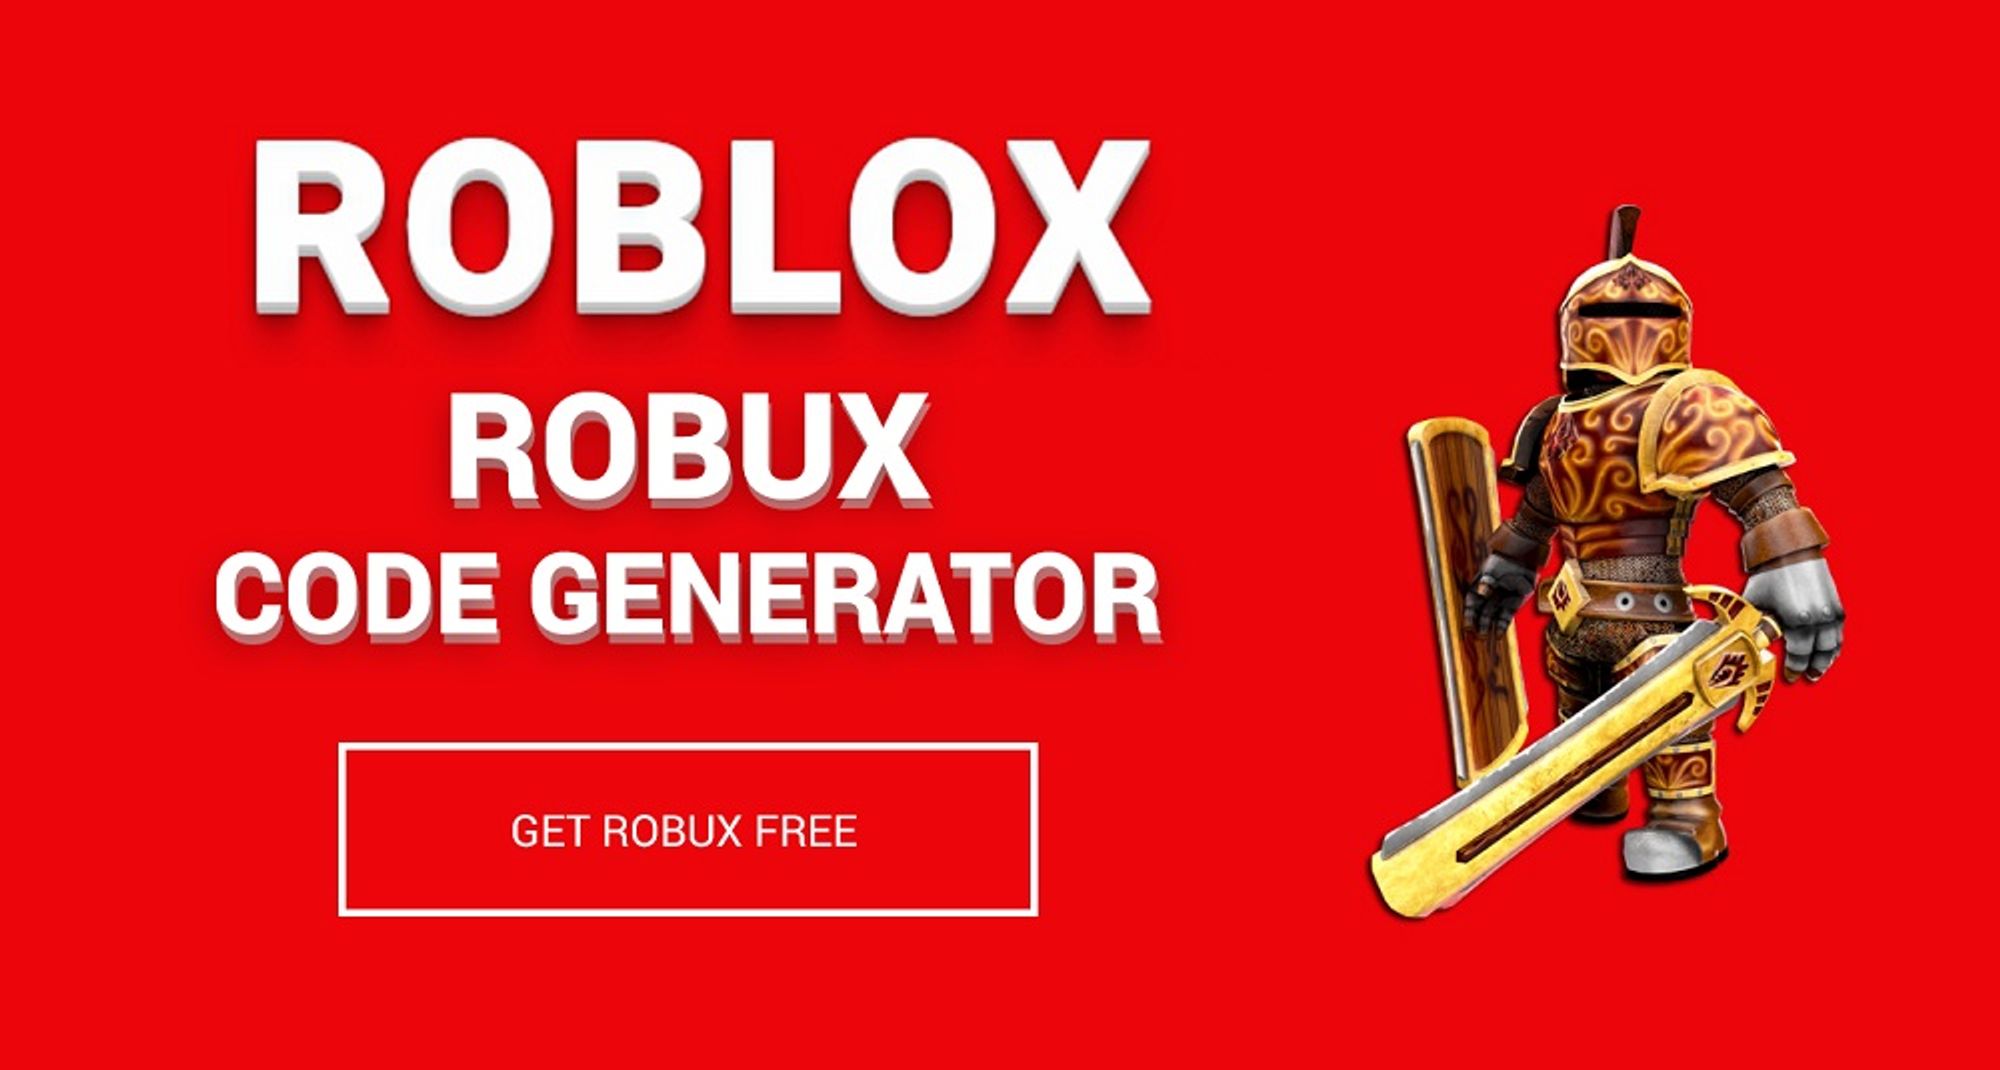 New Method Free Robux Generator No Survey No Download No Verification 2019 - free robux no human verification or survey or download 2019